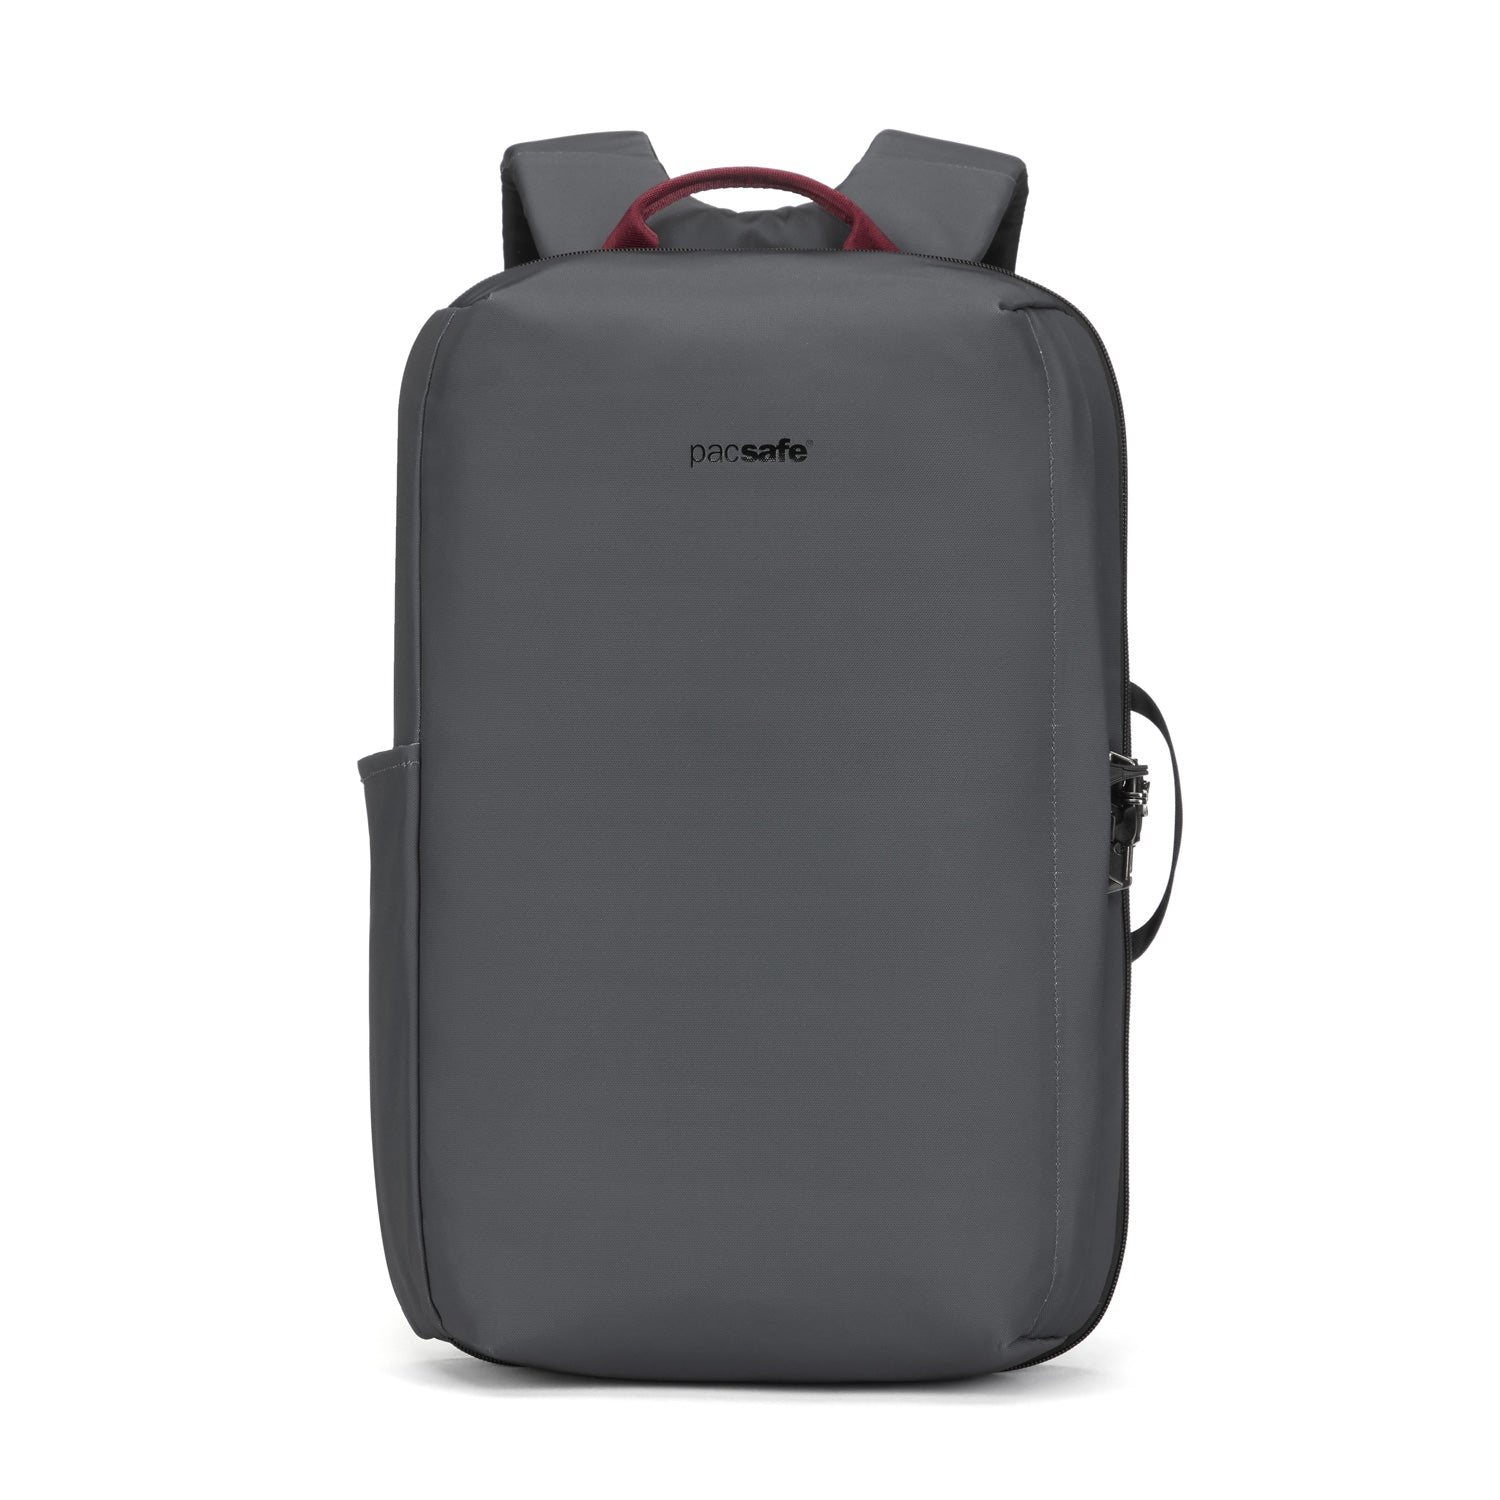 Pacsafe Backpacks & Luggage - Price Beat Guarantee